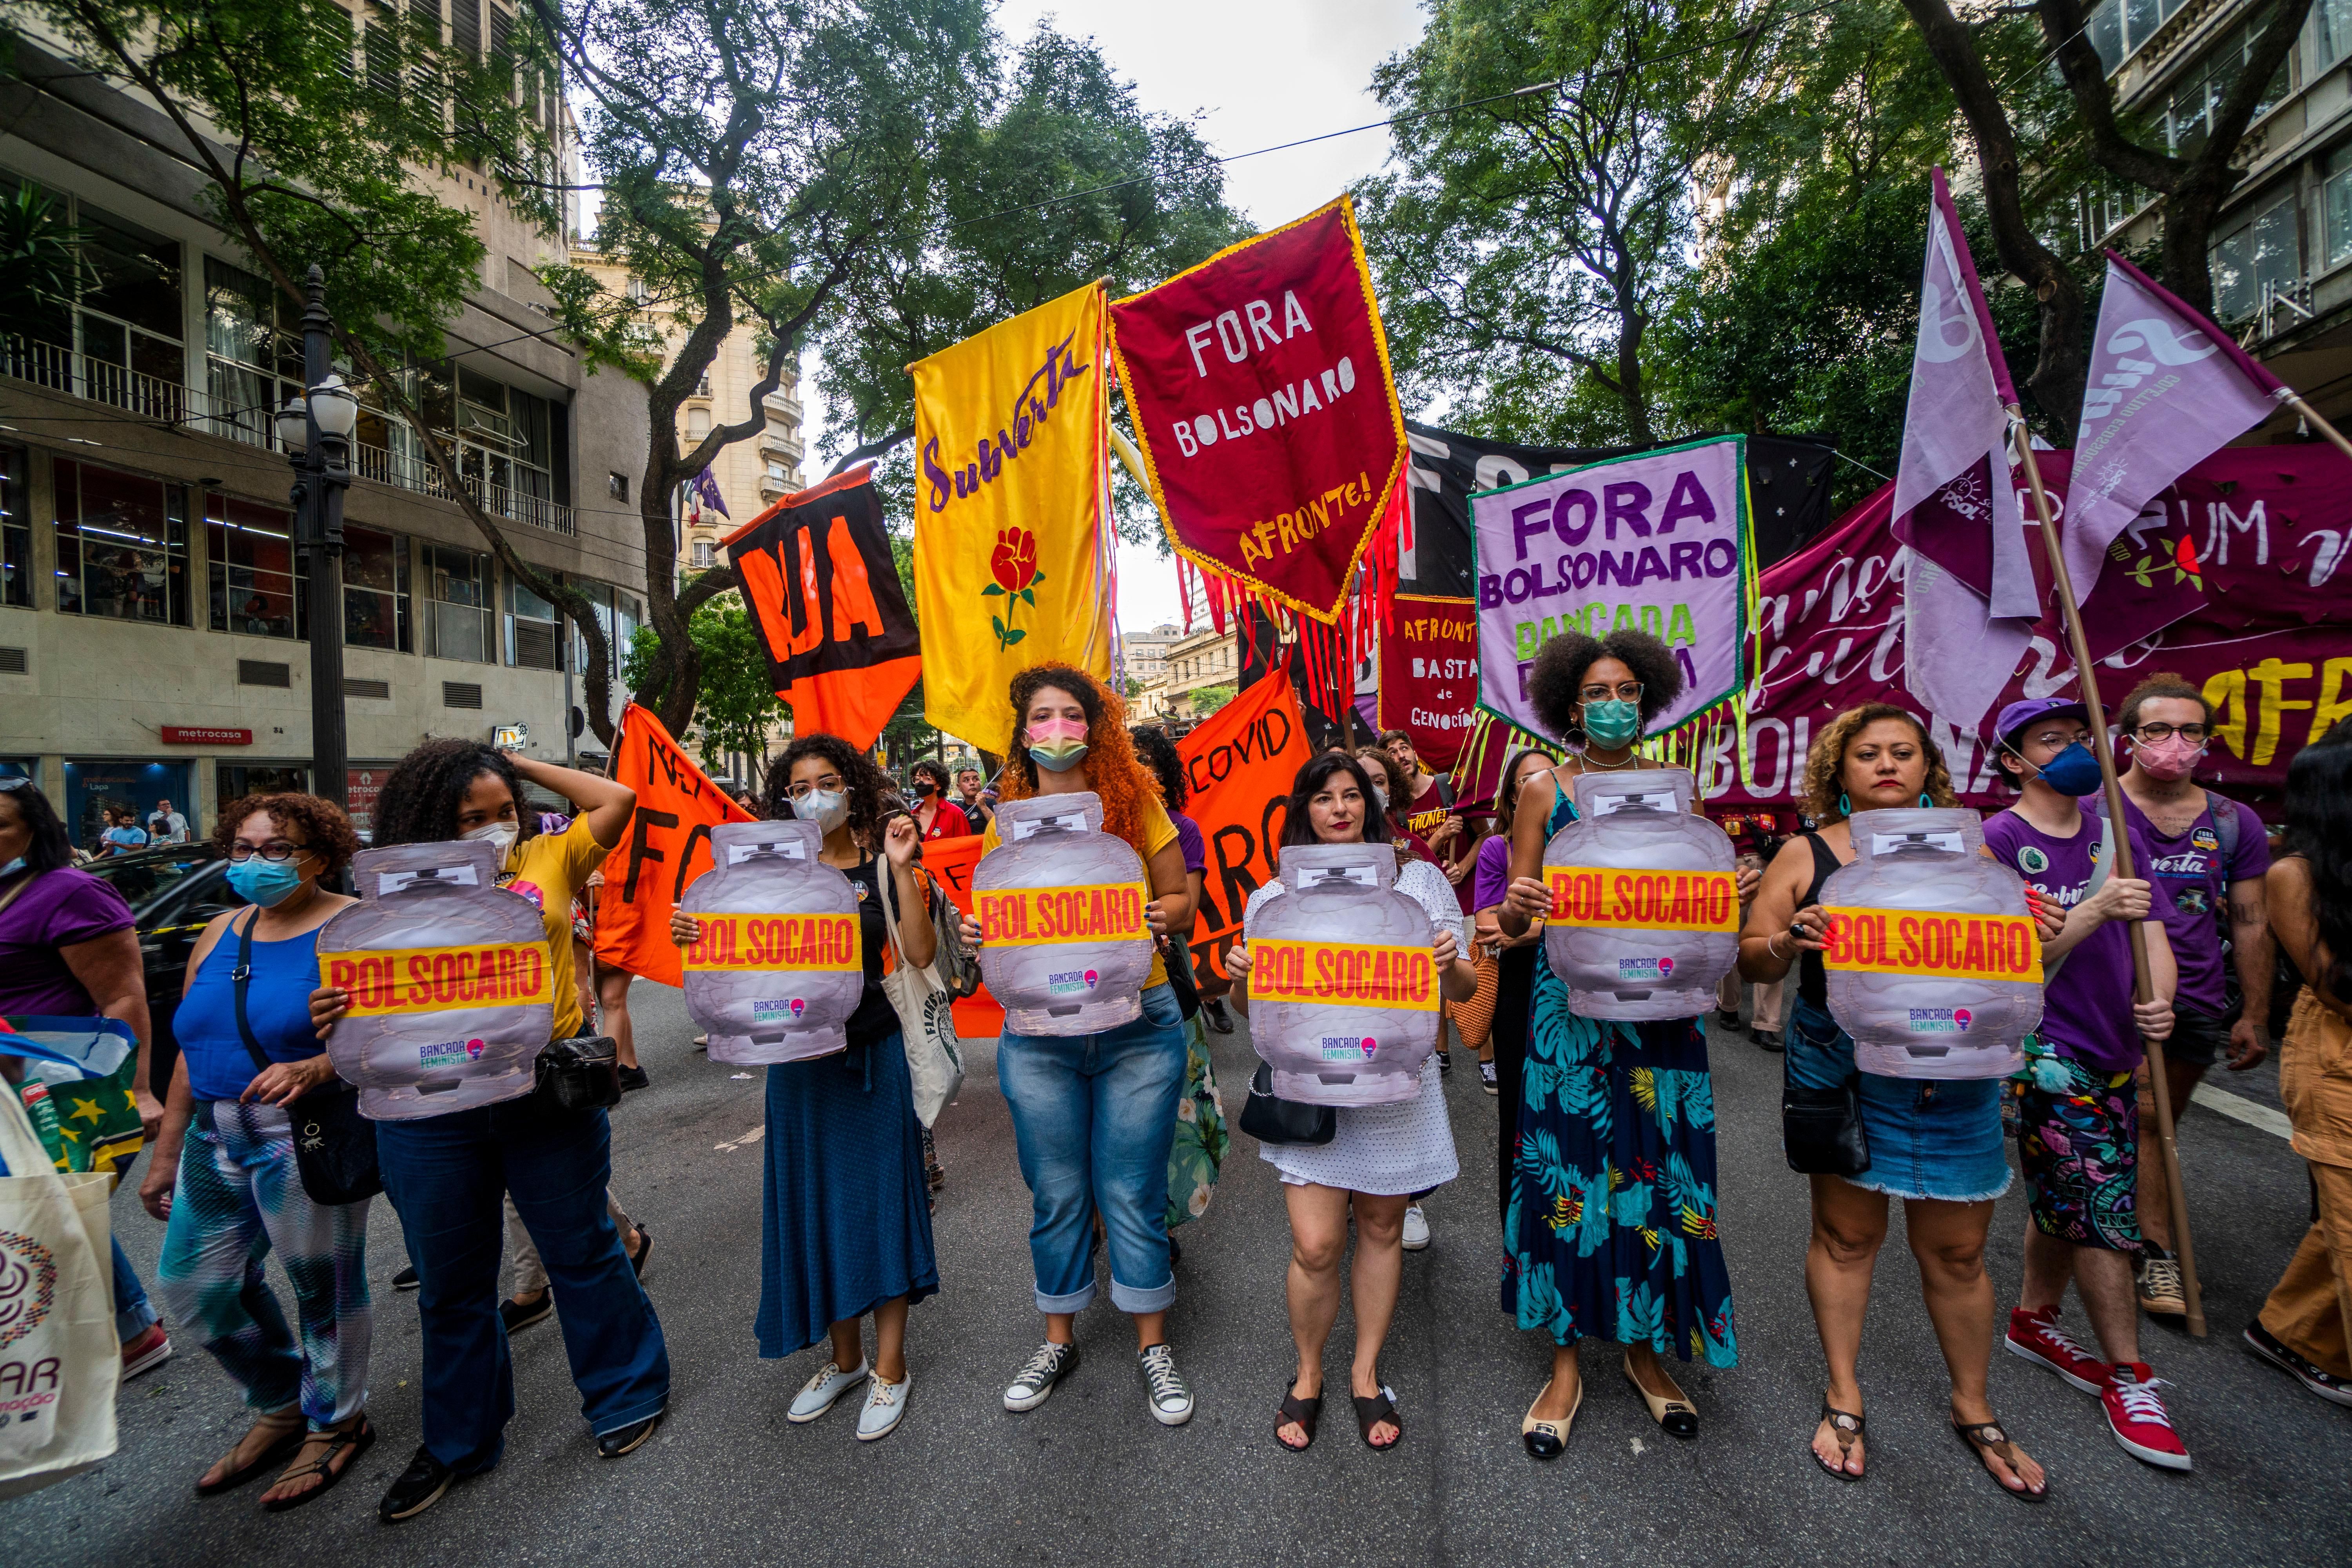 Brazil anti-Bolsonaro protest 